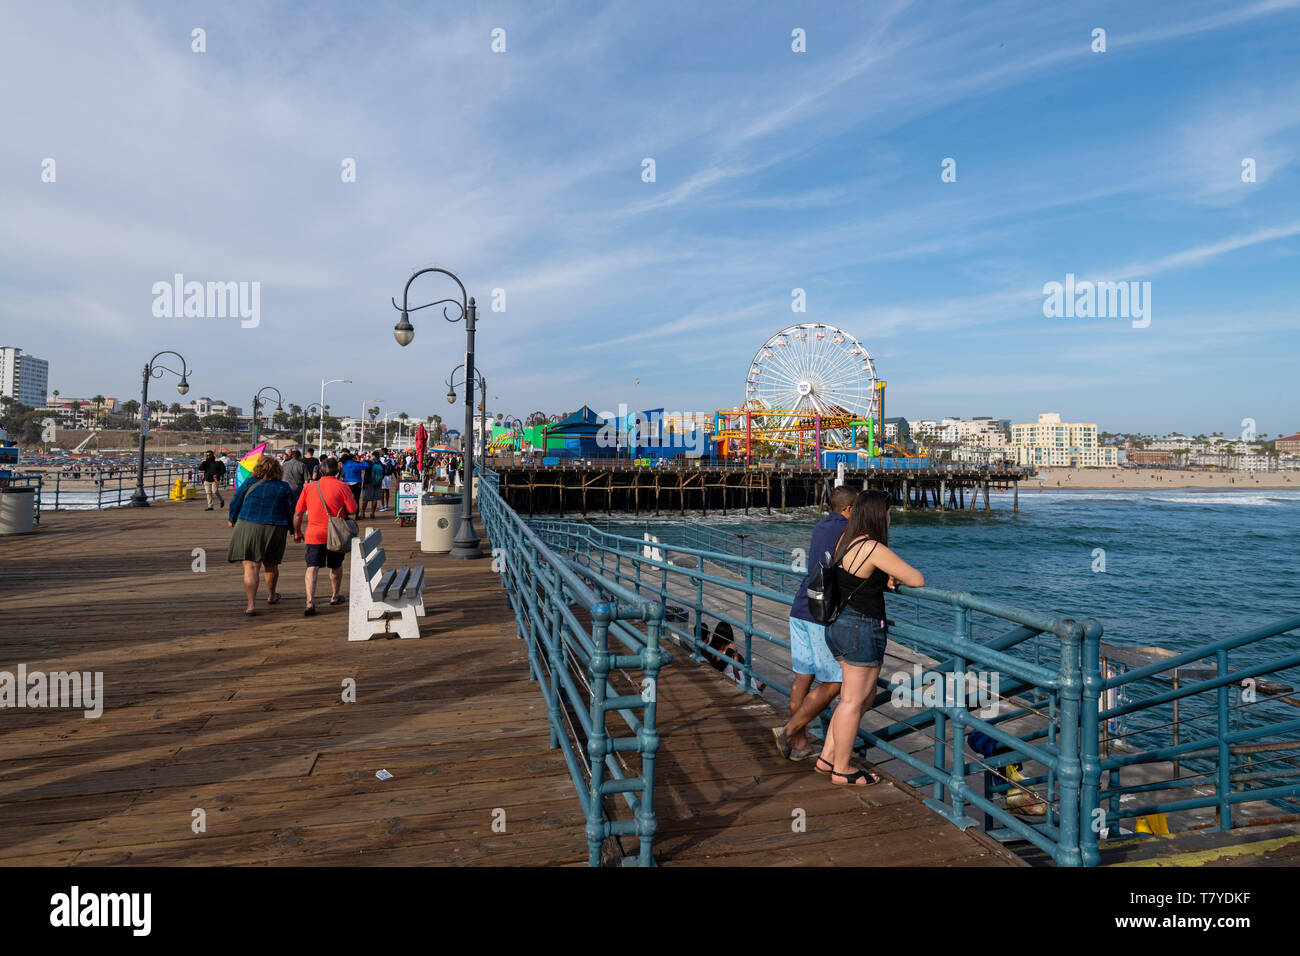 Santa Monica, Los Angeles, California, USA: Santa Monica pier *** Local Caption *** Stock Photo